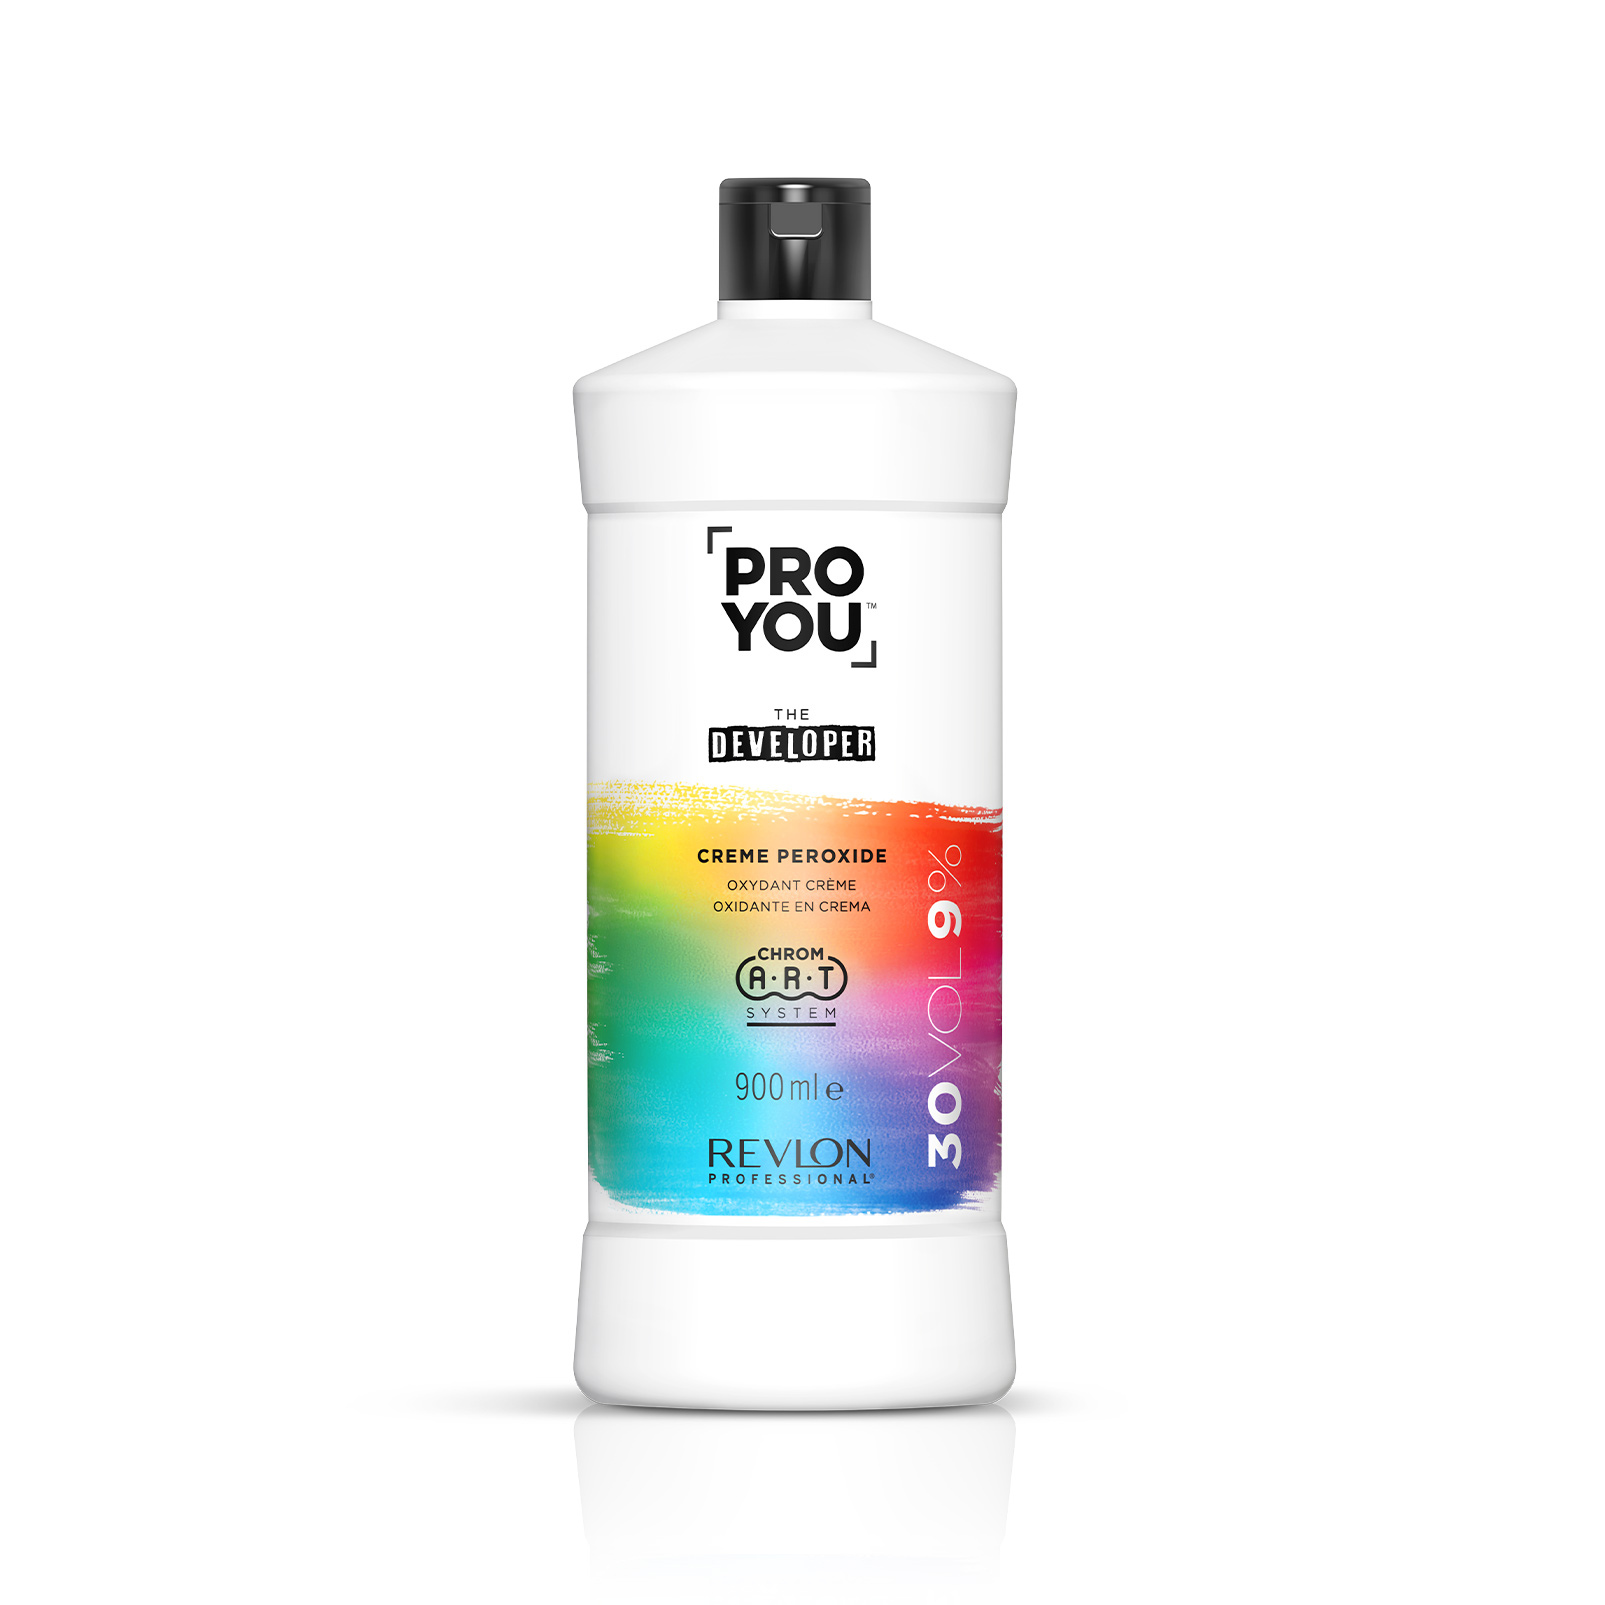 Pro You Color The Developer Creme Peroxide